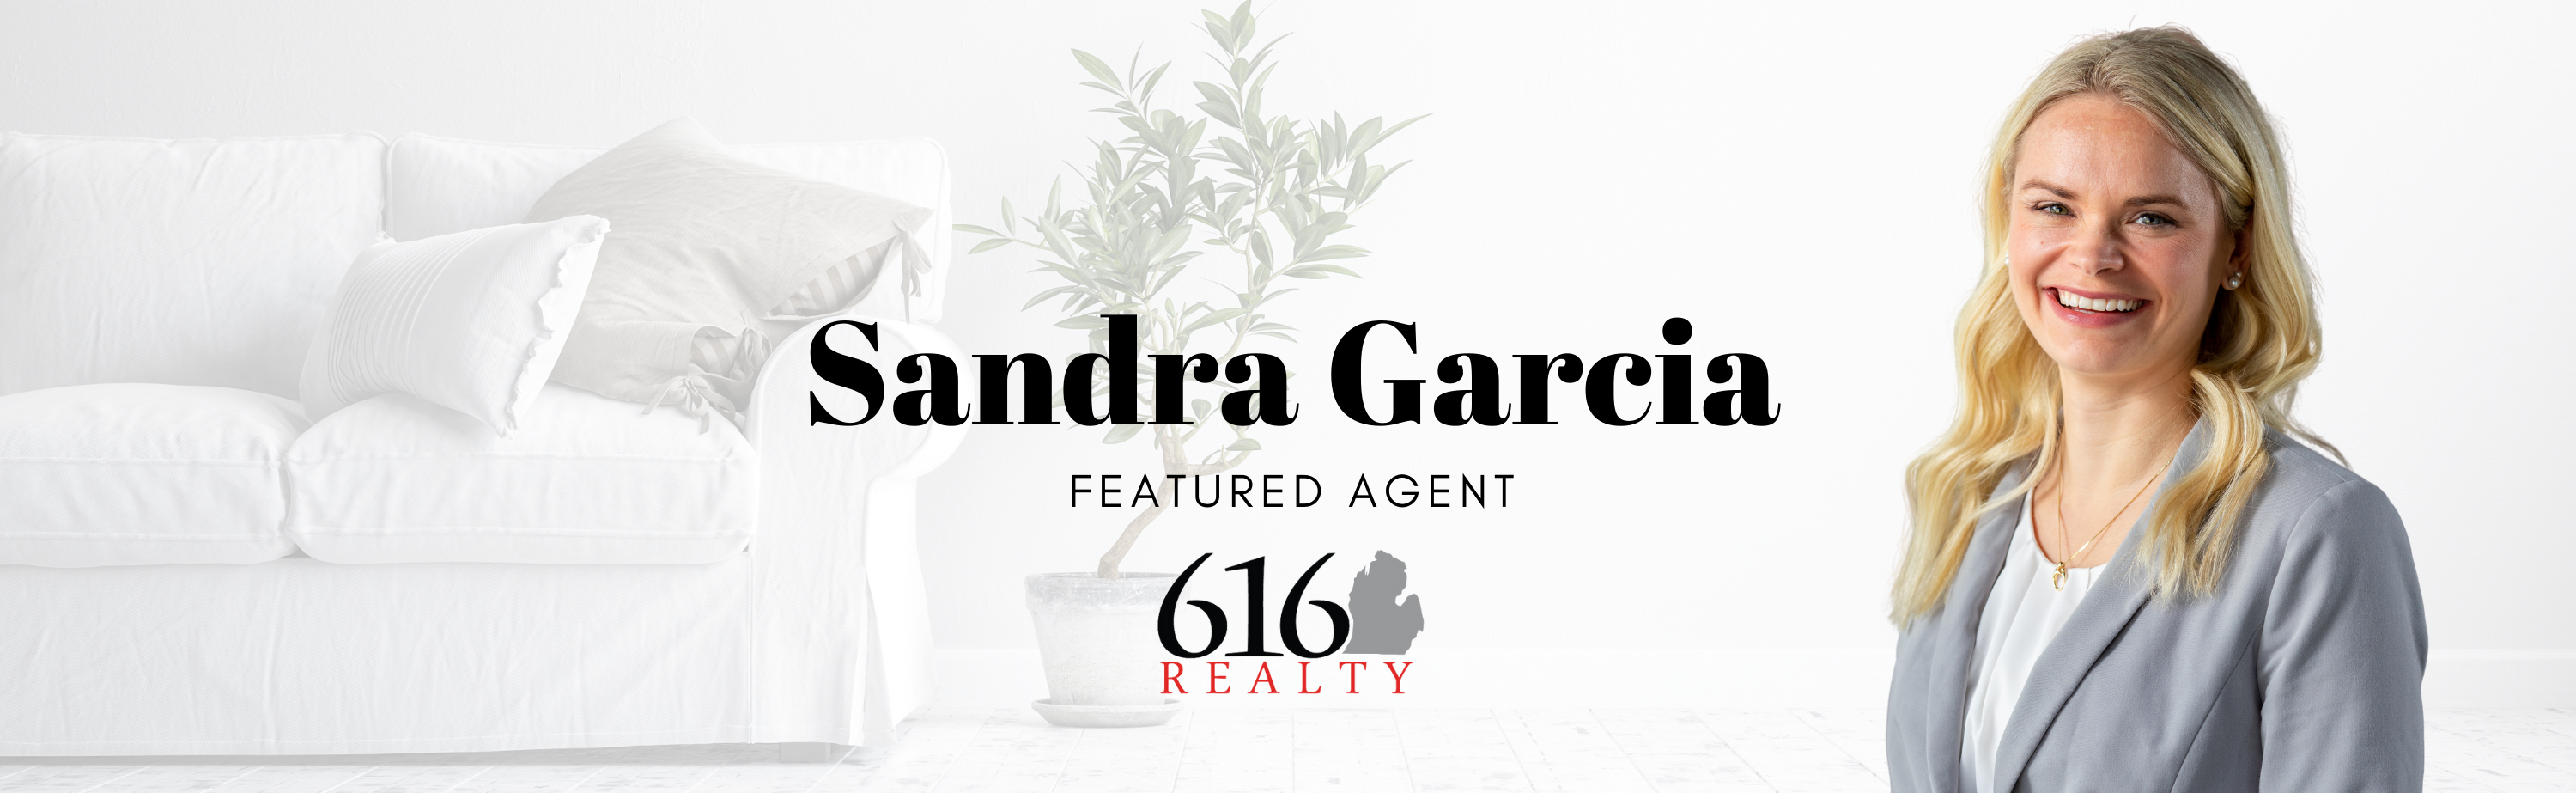 Sandra Garcia Agent Banner